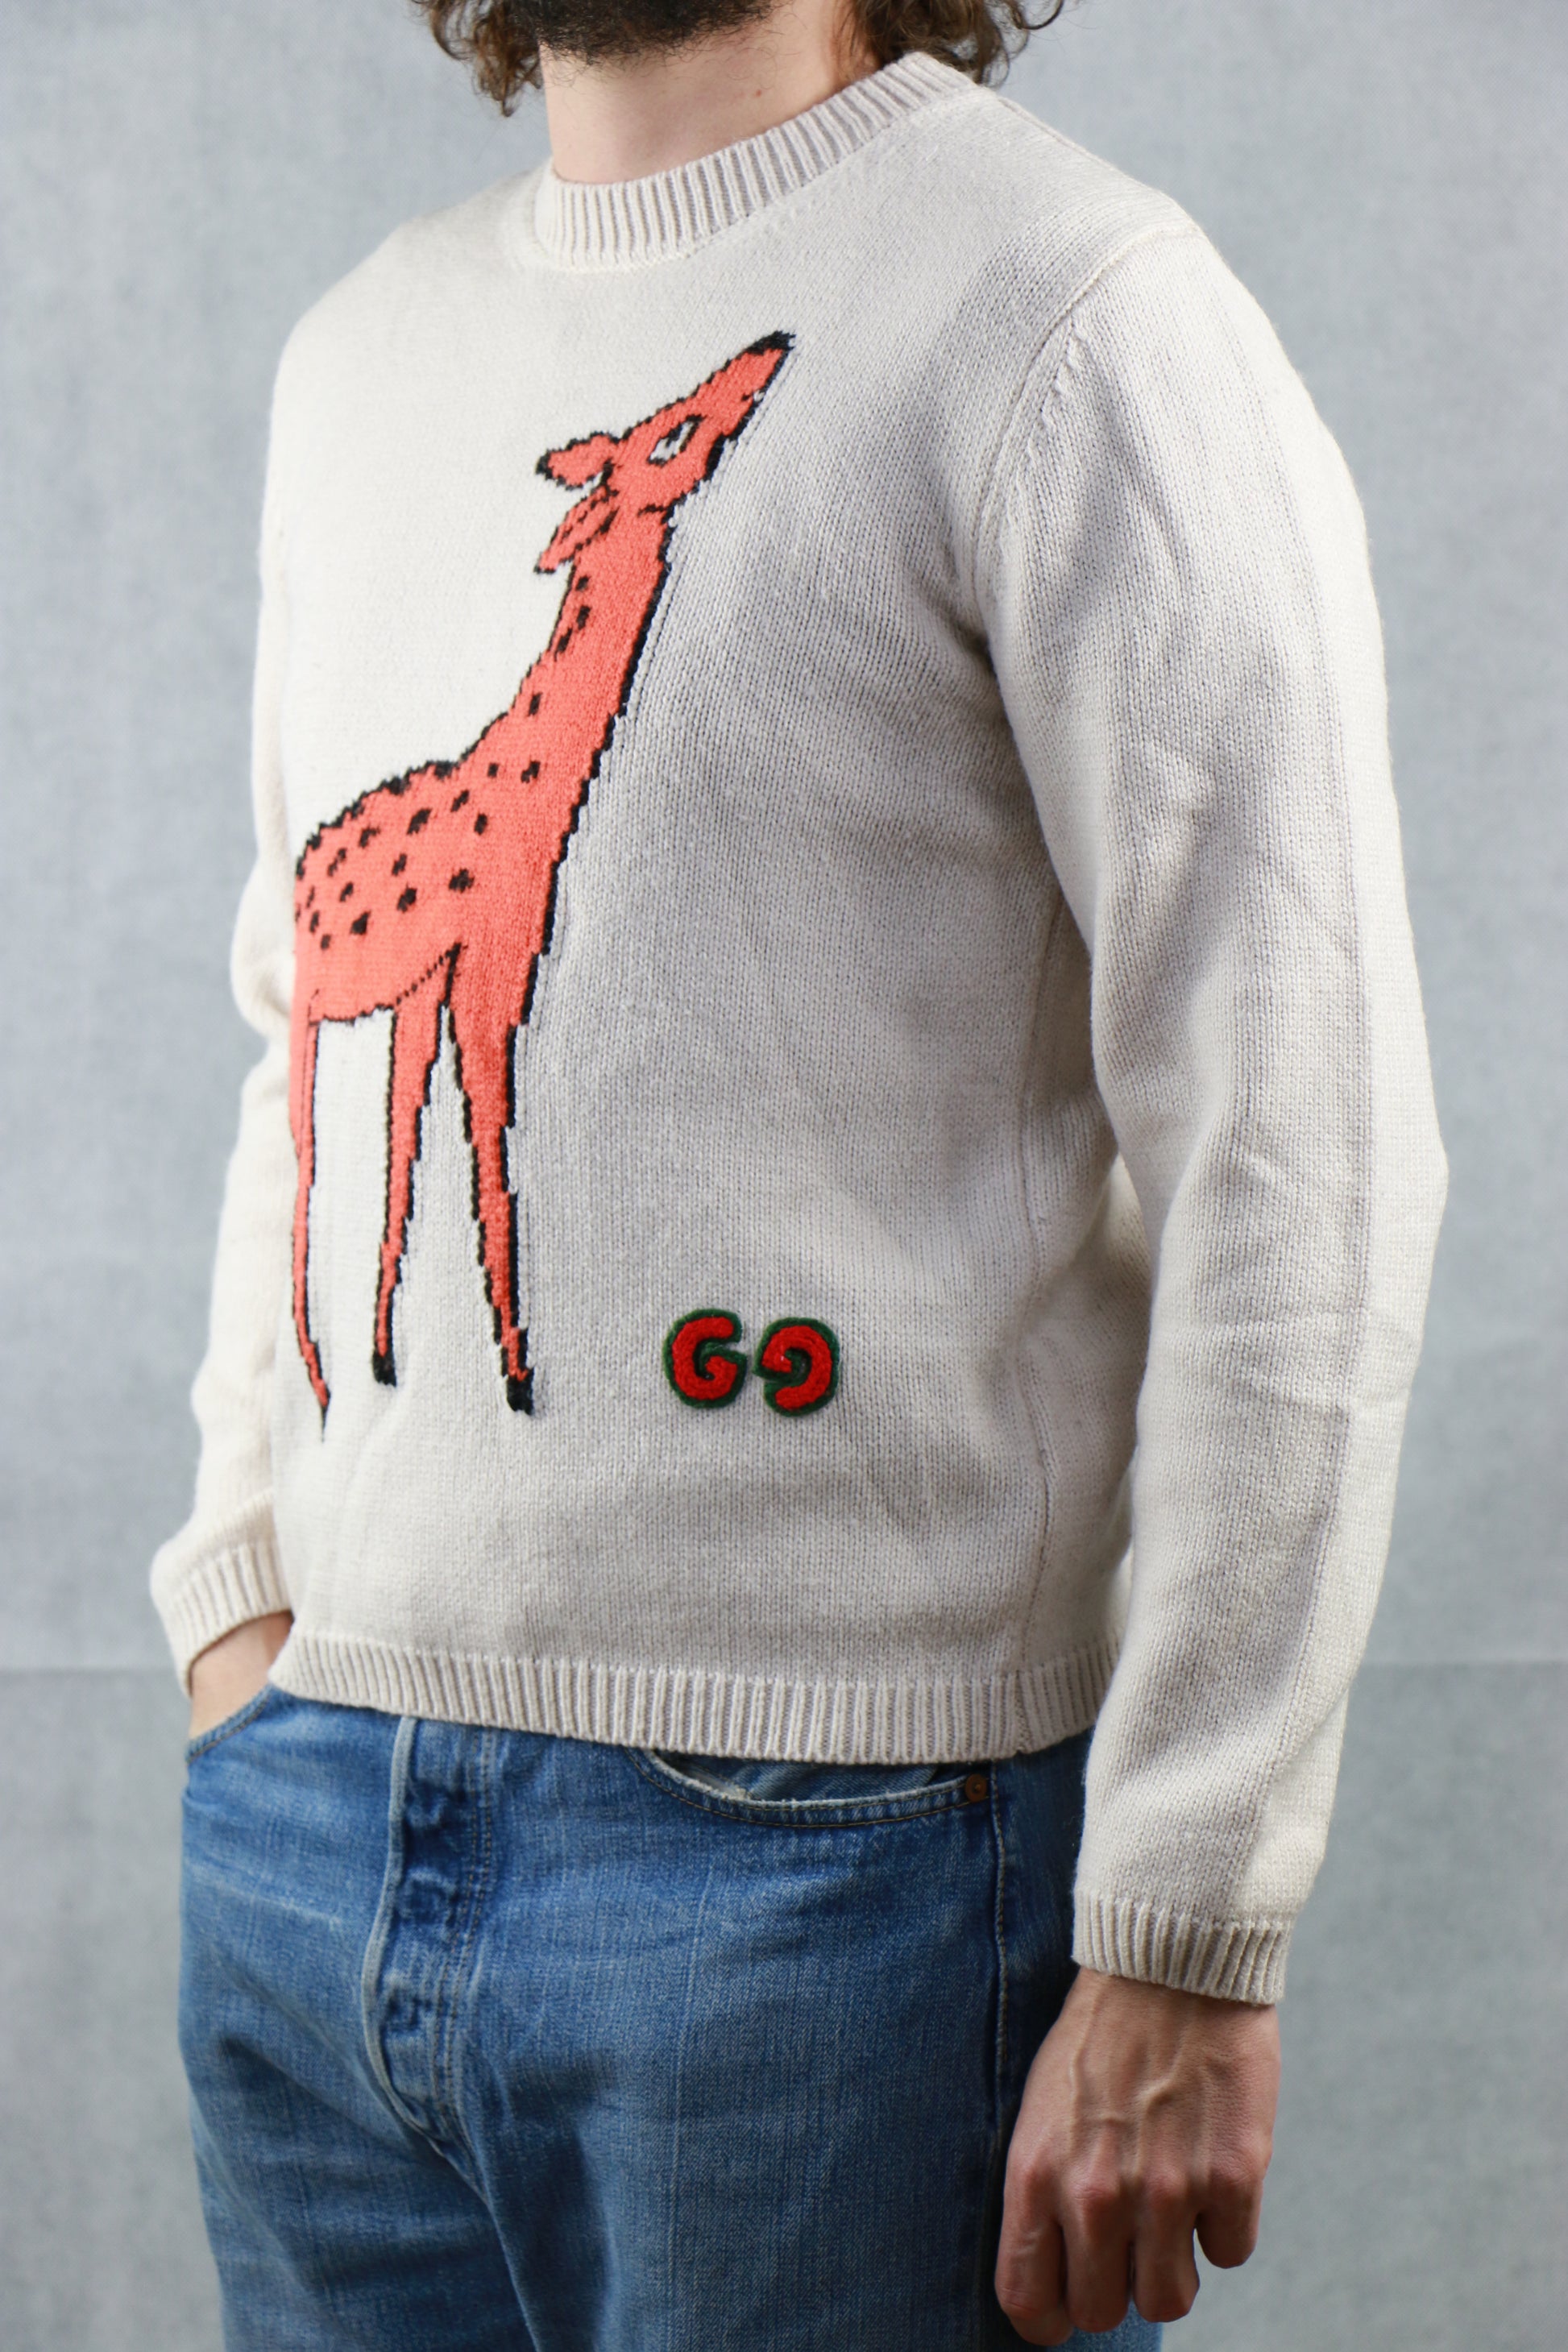 Gucci Sweater, vintage store clochard92.com